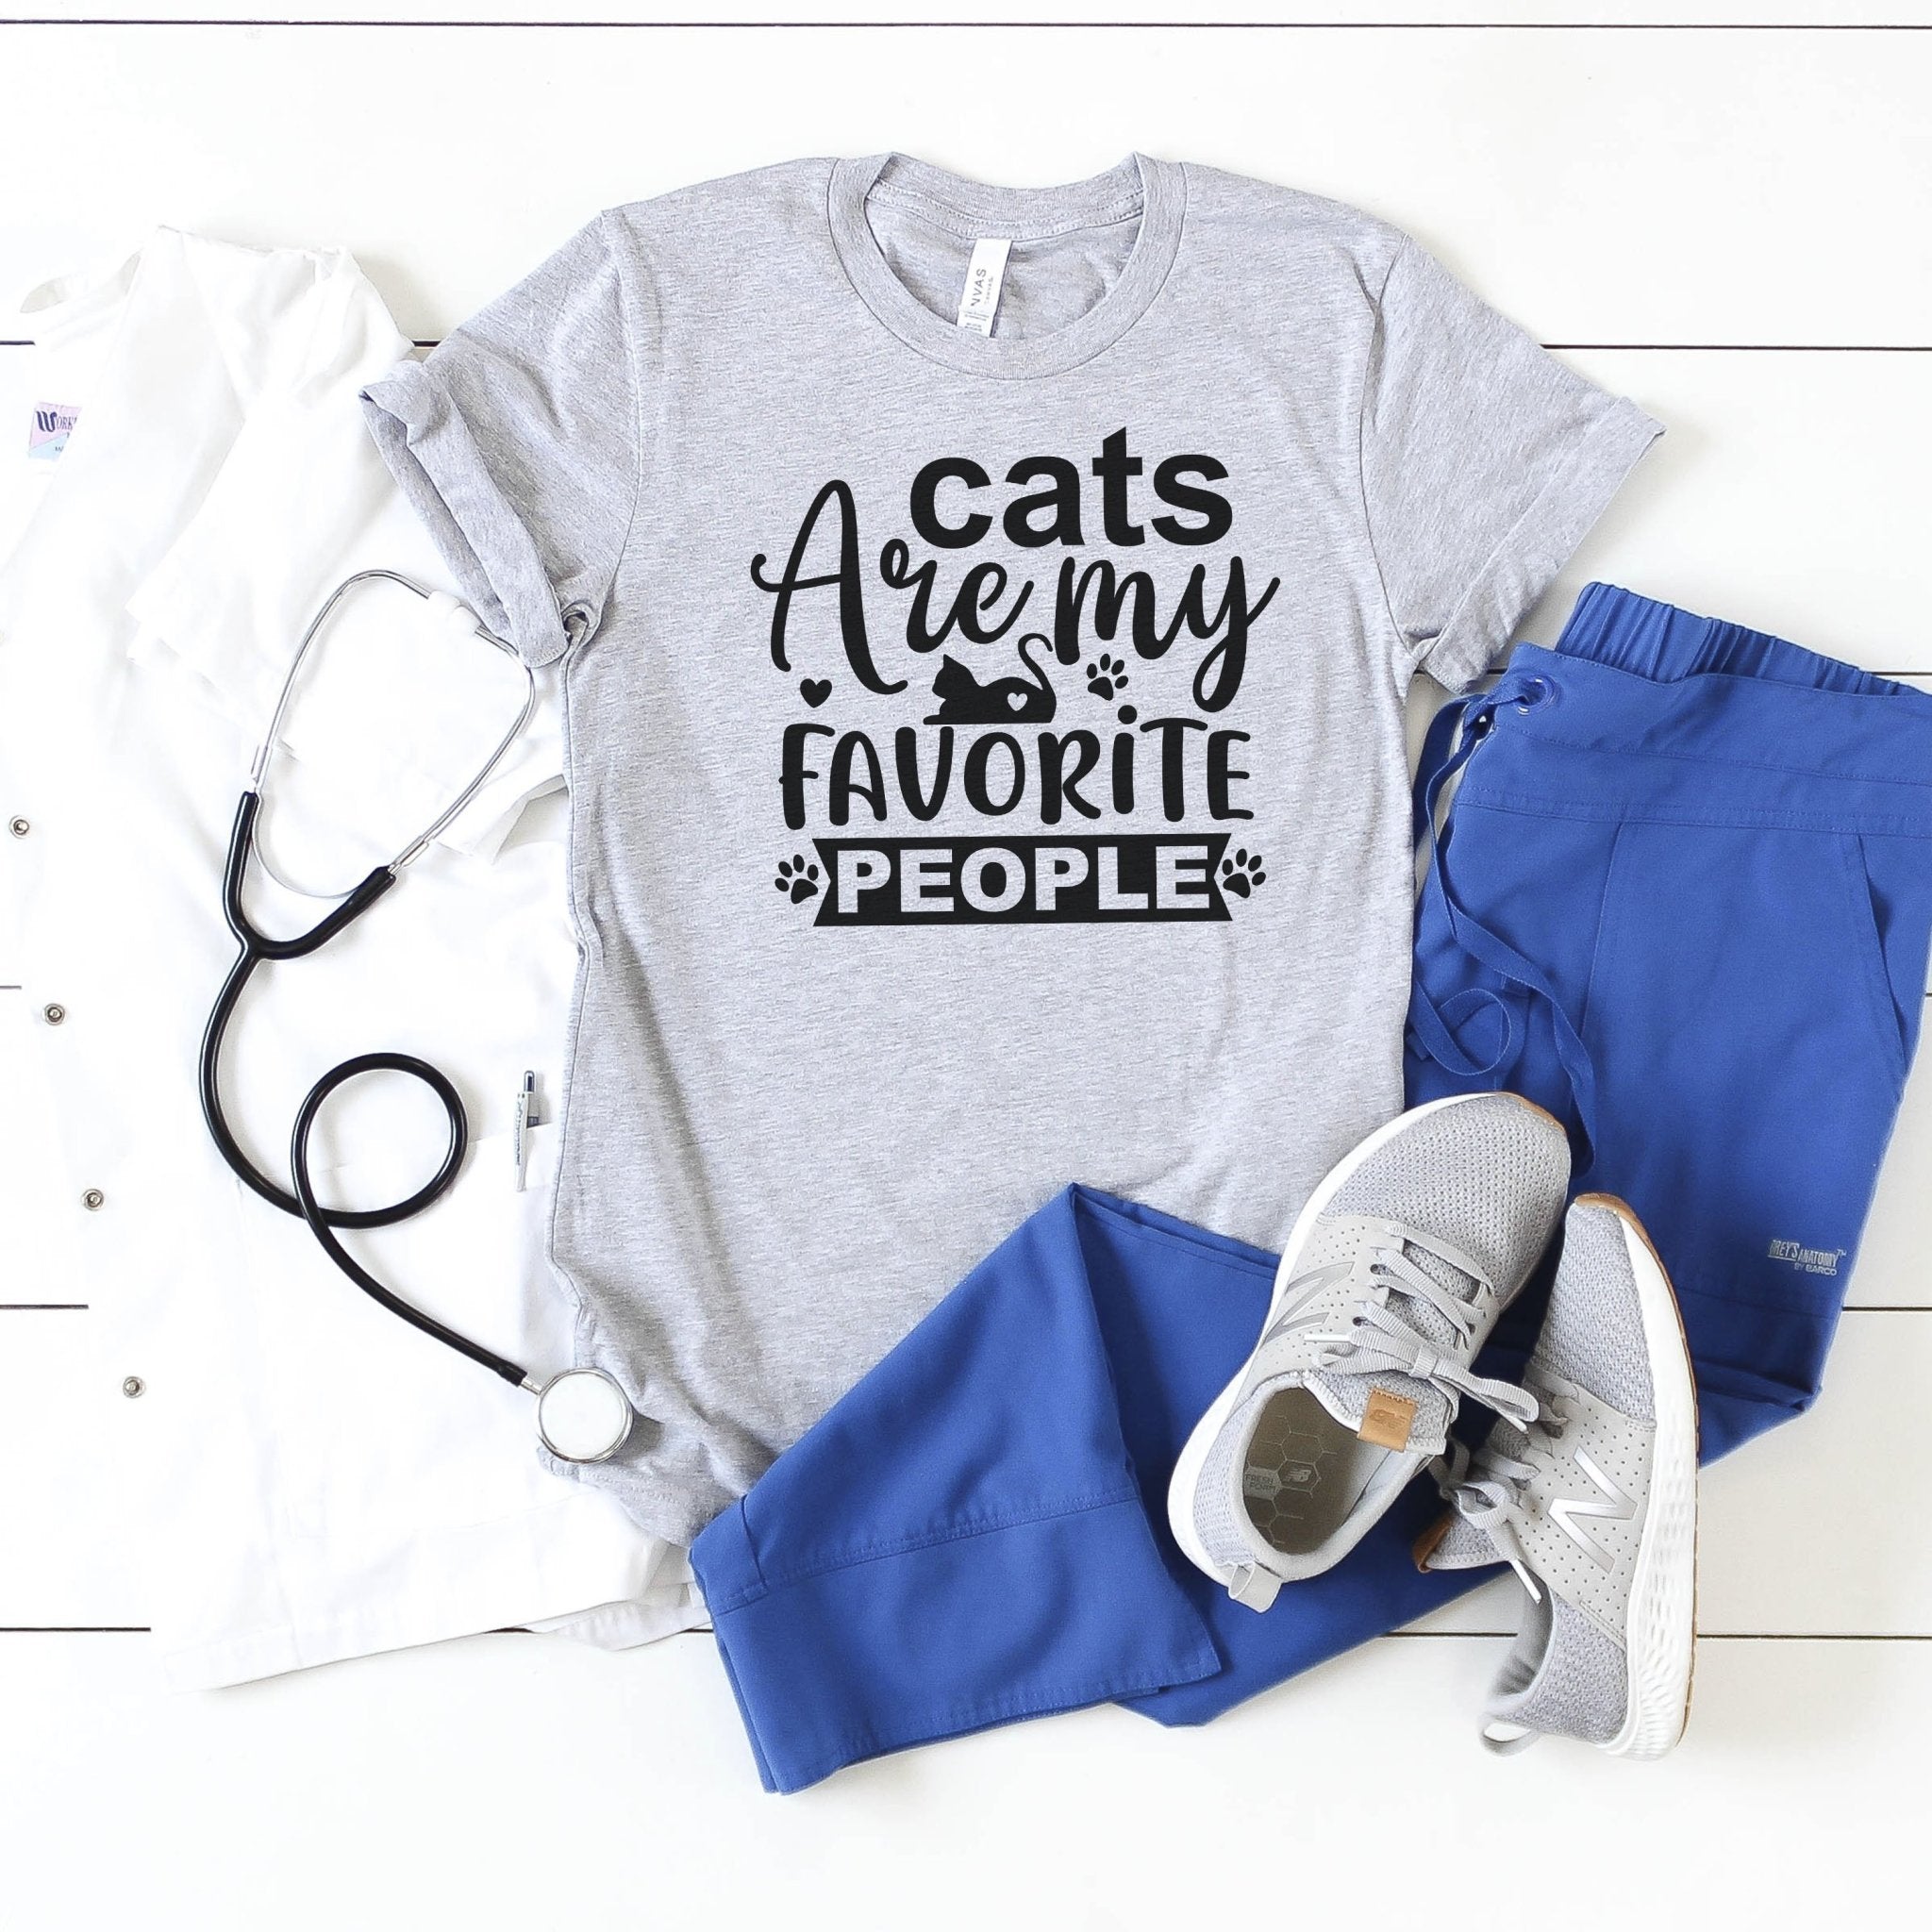 Oversize Vintage Cat T-Shirt